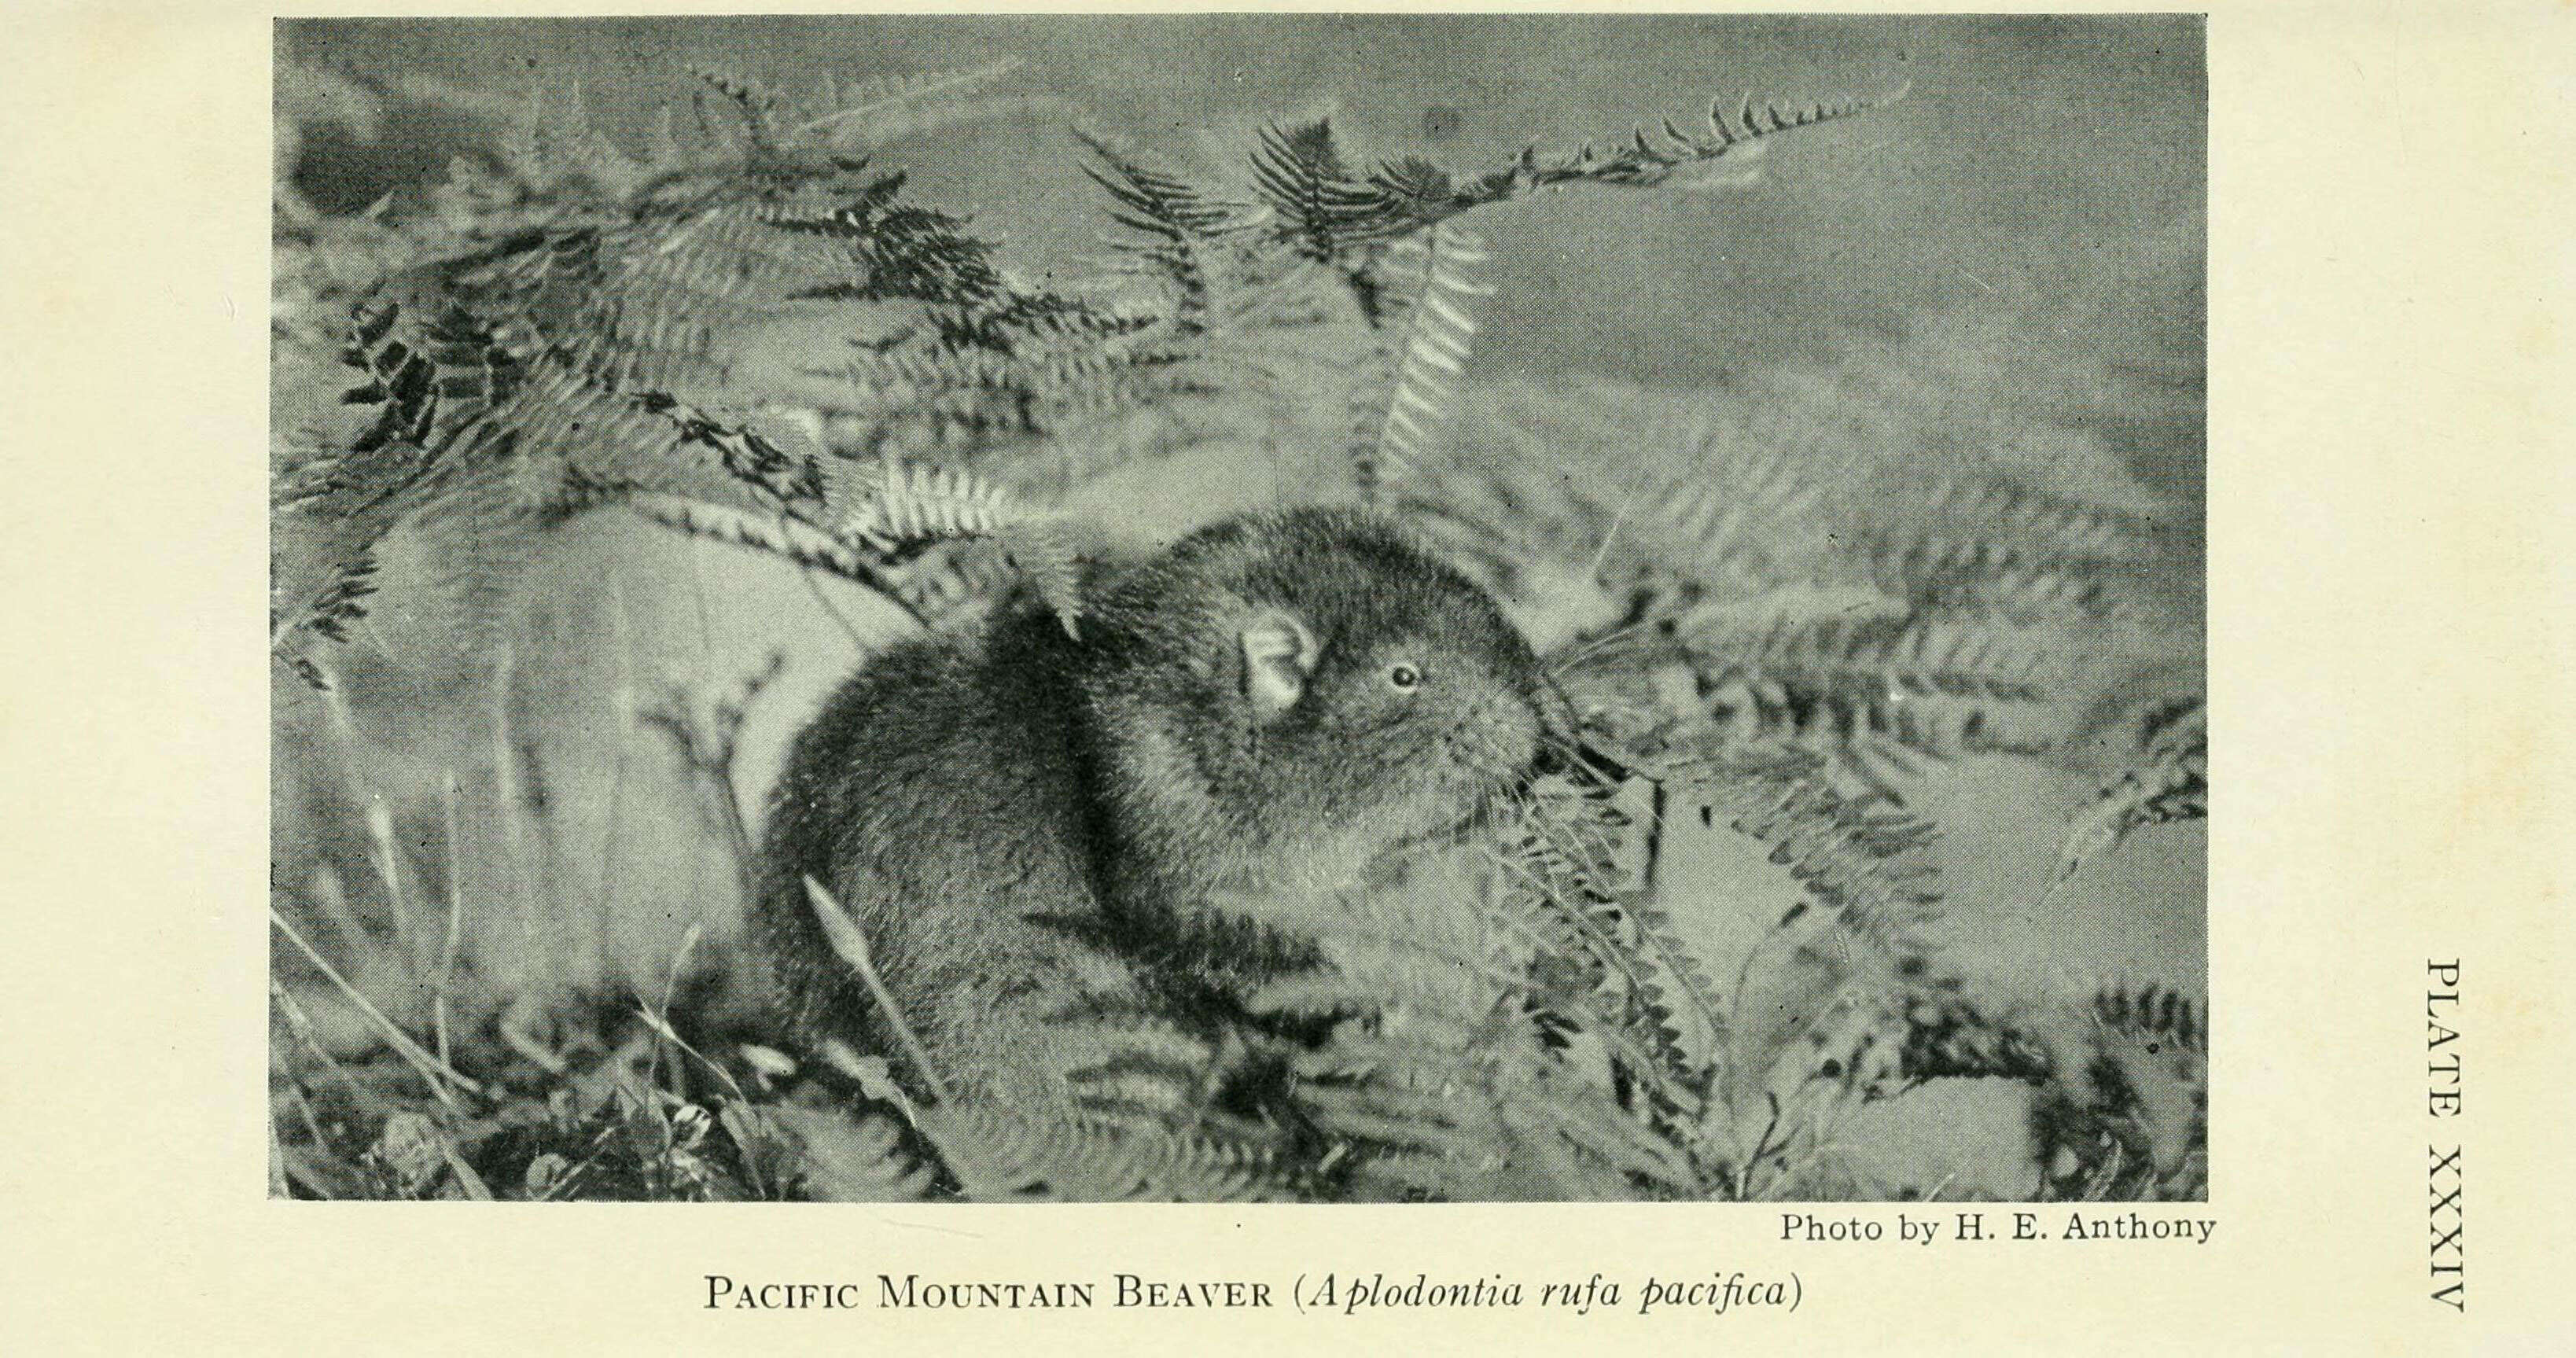 Image of mountain beavers